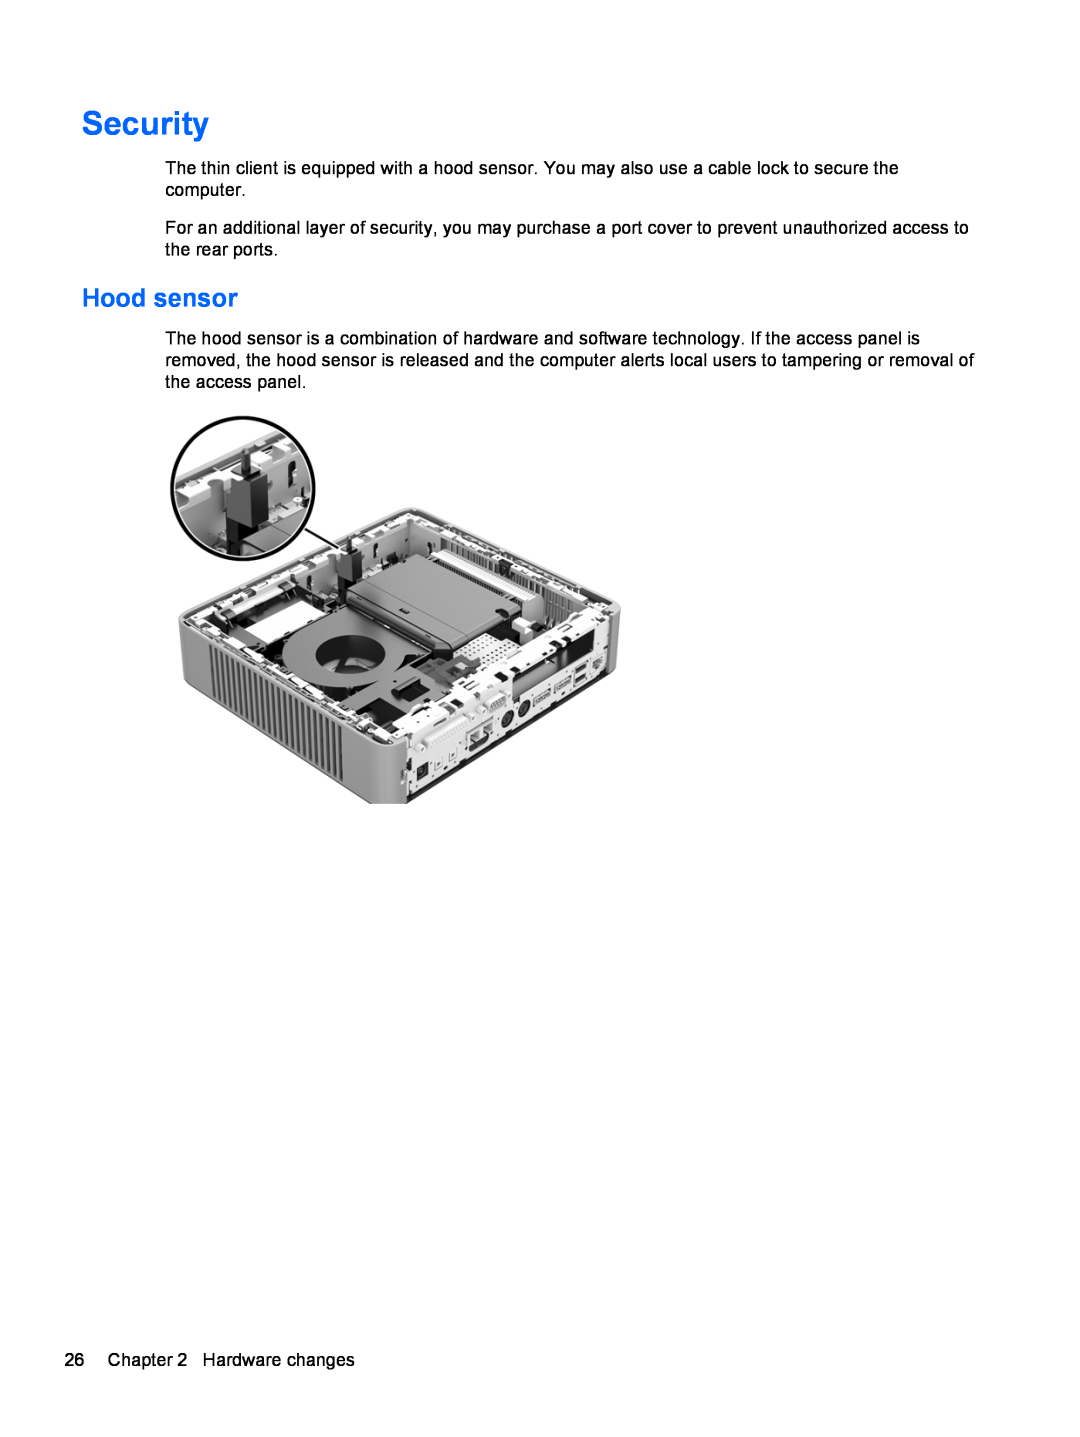 HP ZBook 14 Mobile manual Security, Hood sensor 